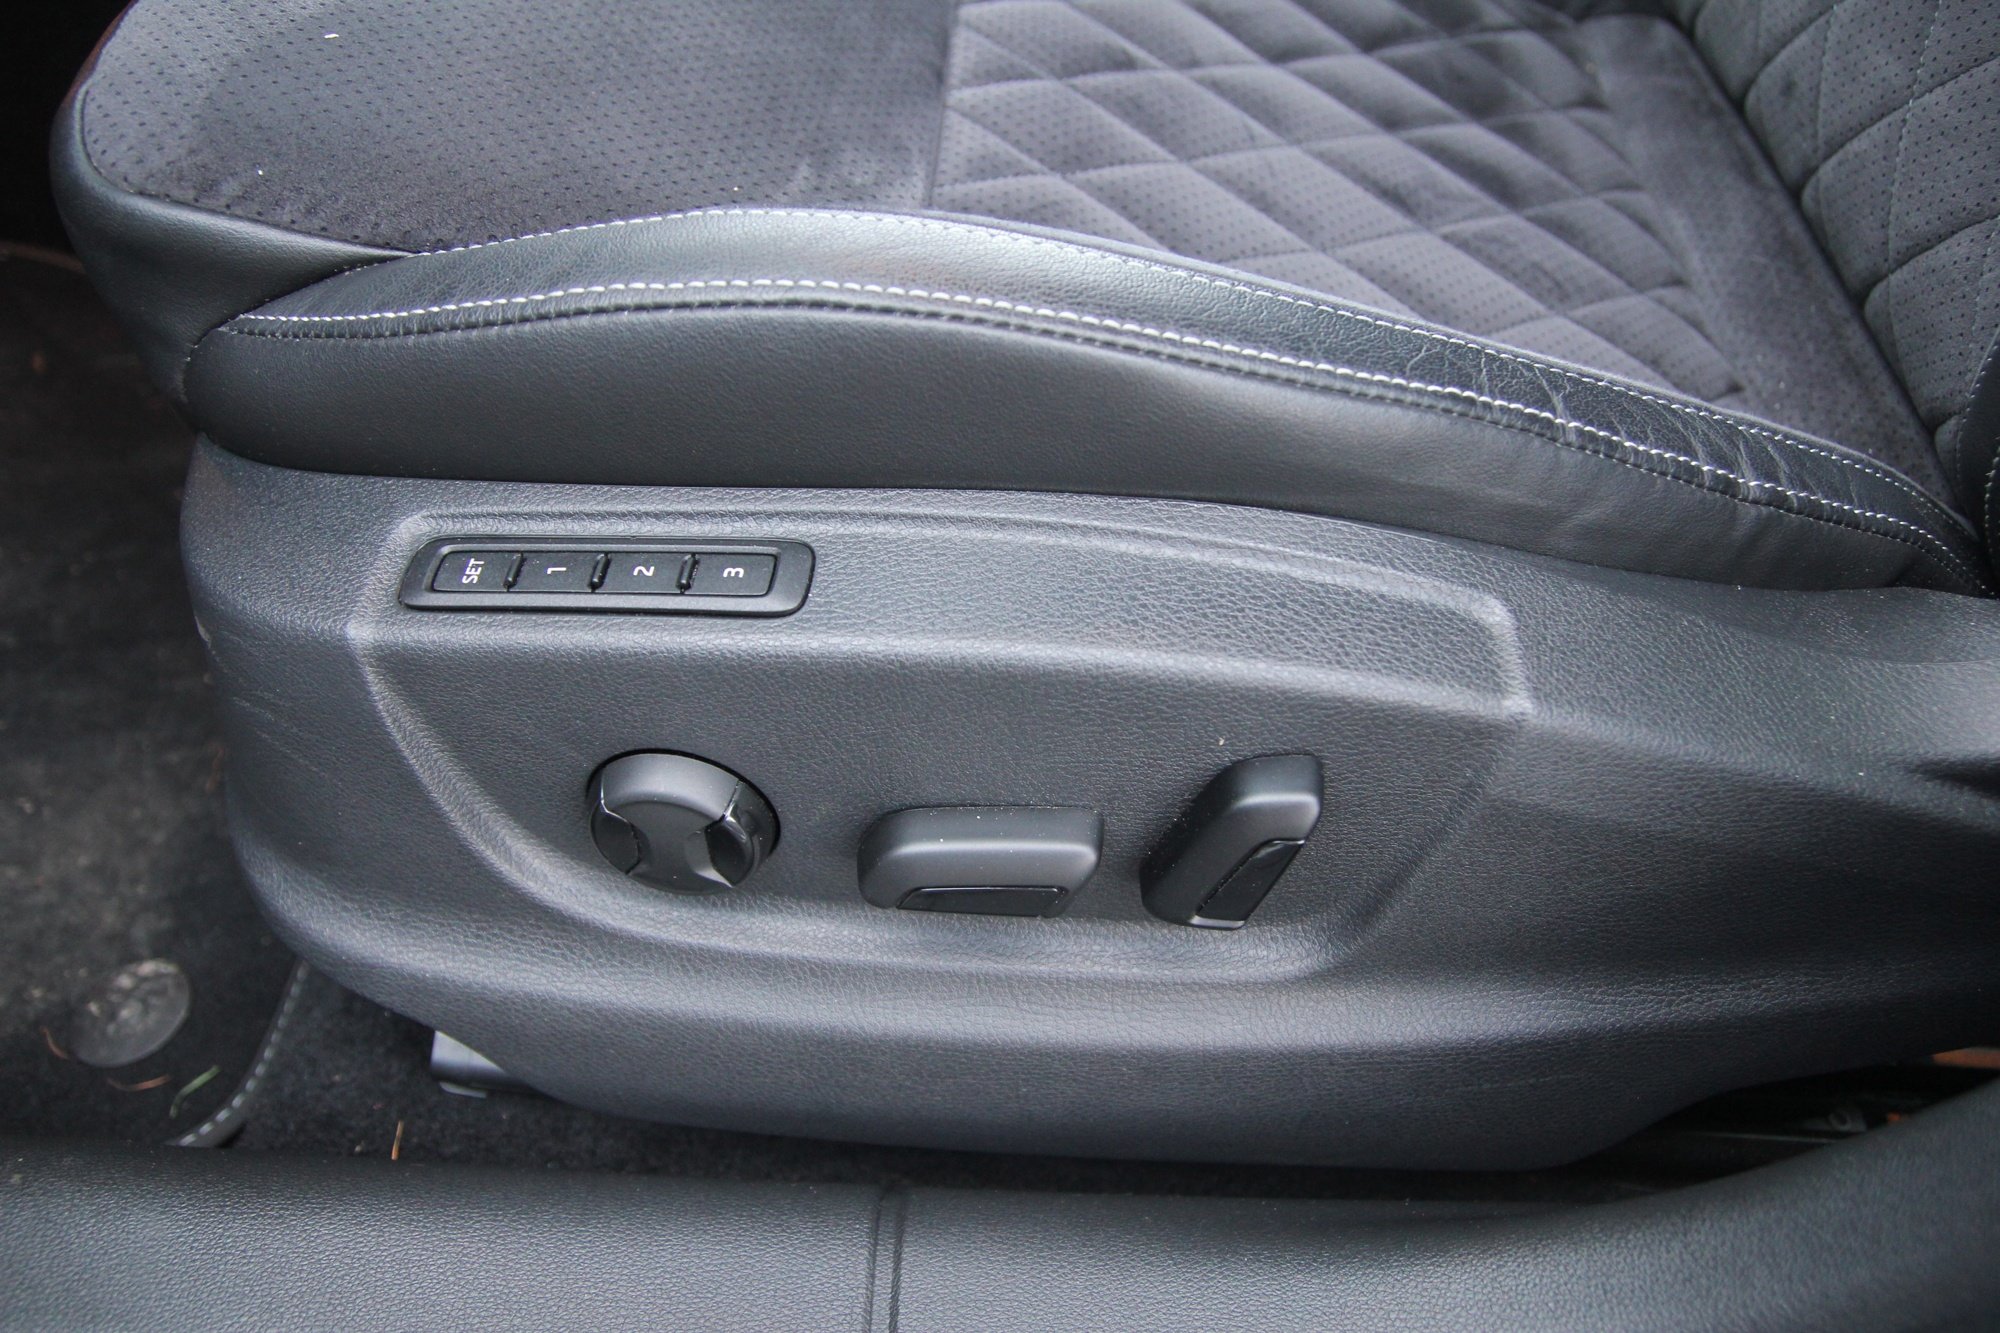 Škoda Octavia RS 245